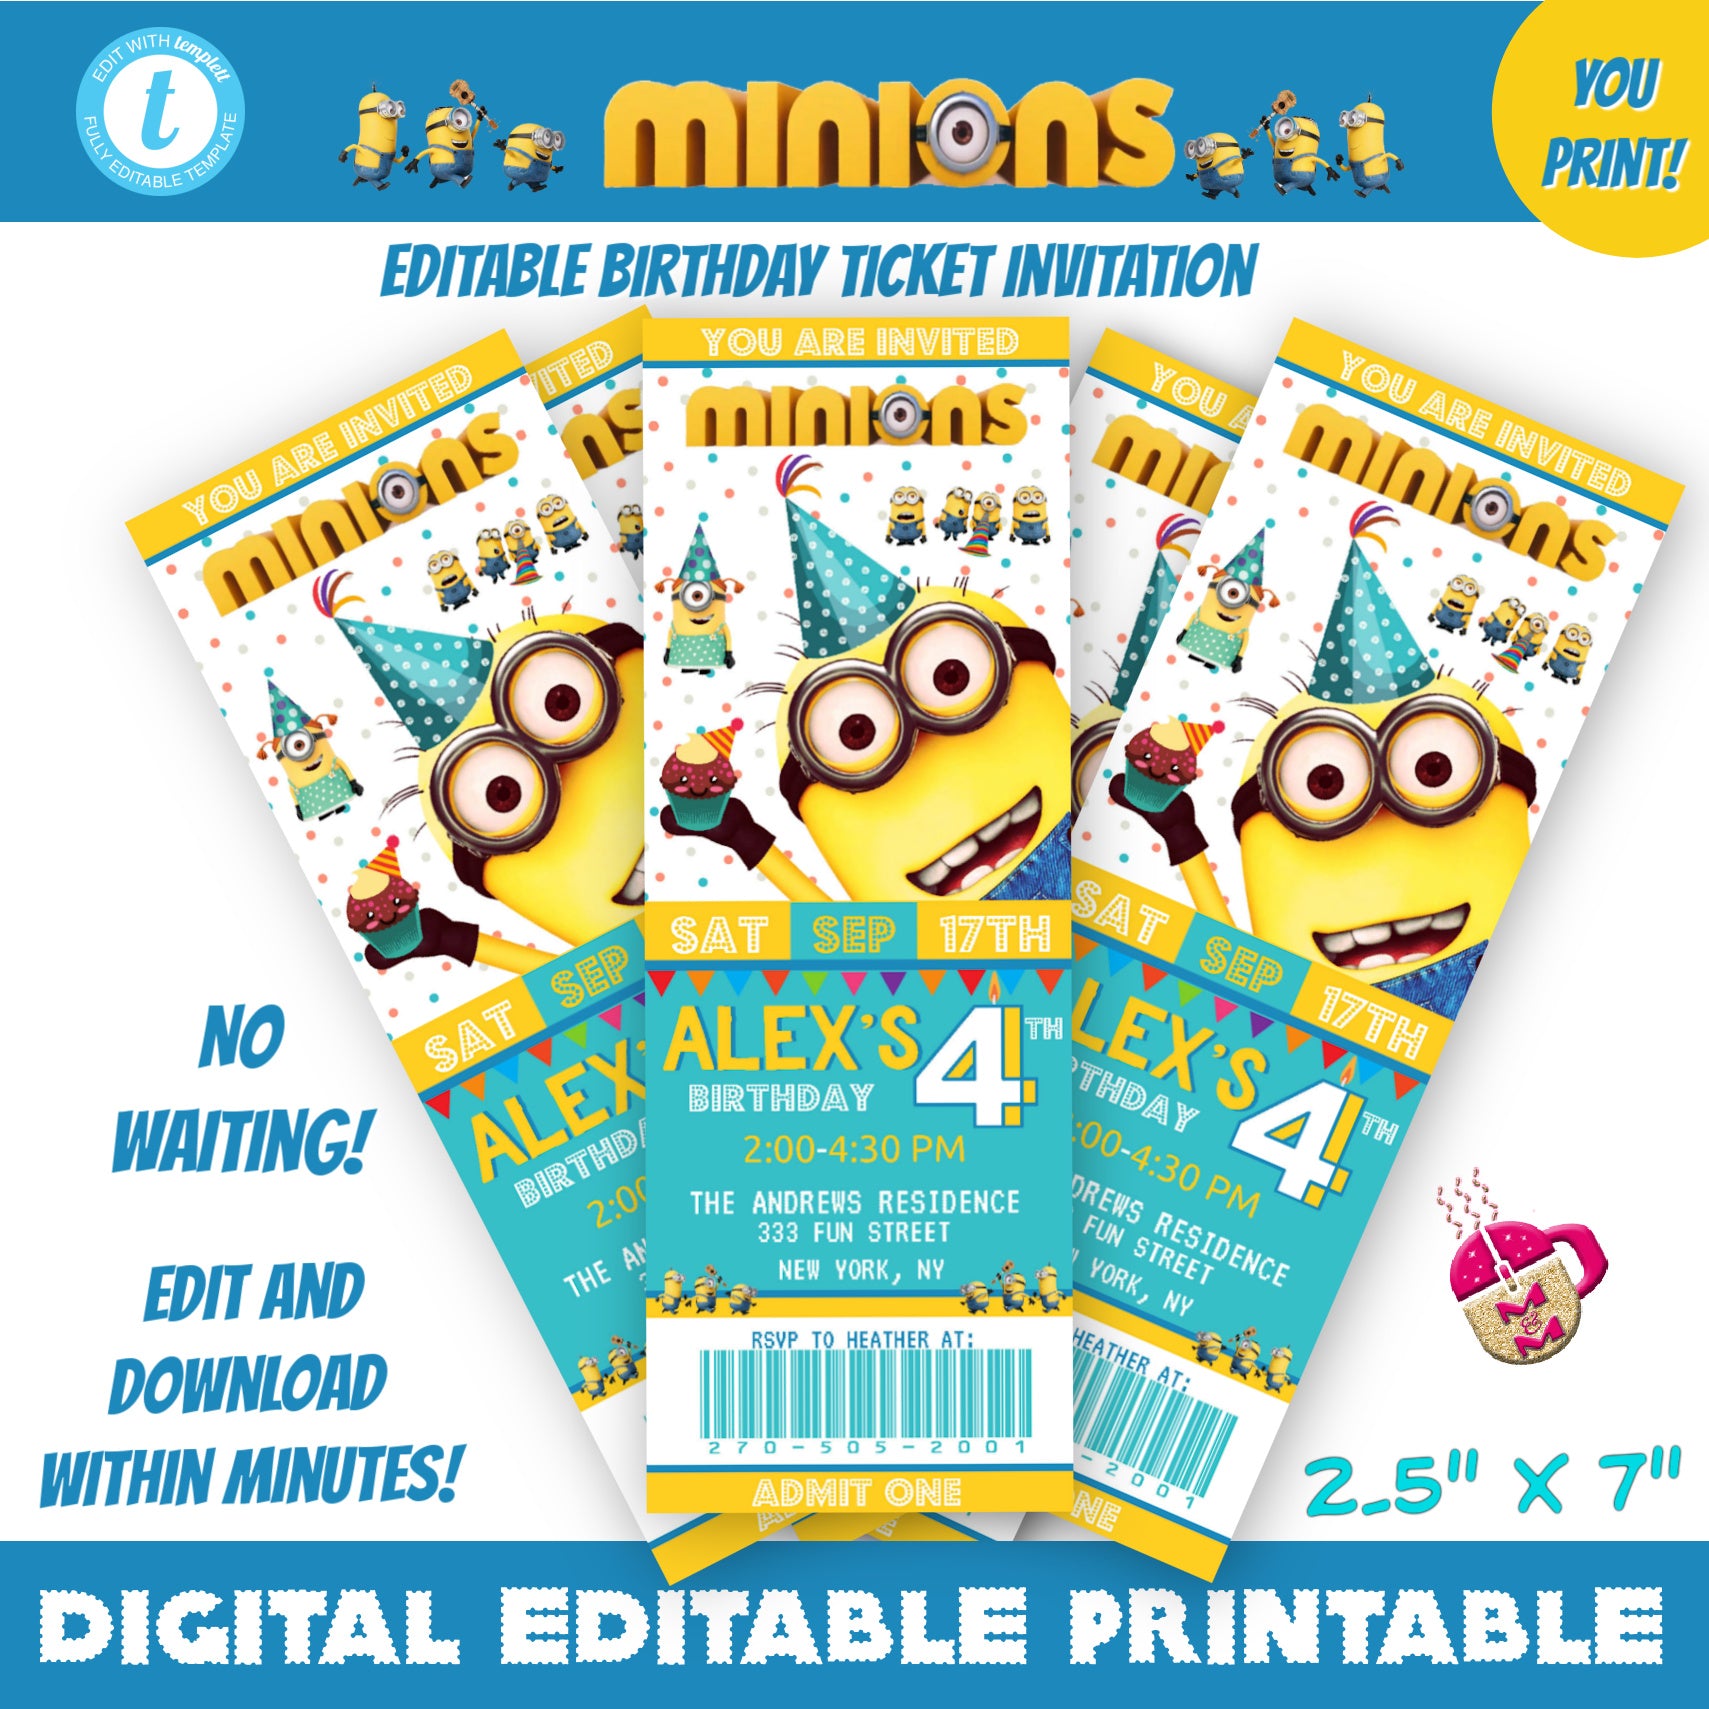 Editable Minions Birthday Party Ticket Invitation Printable, Minions cinema ticket invitation, Despicable Me Movie Ticket, Minions Invite